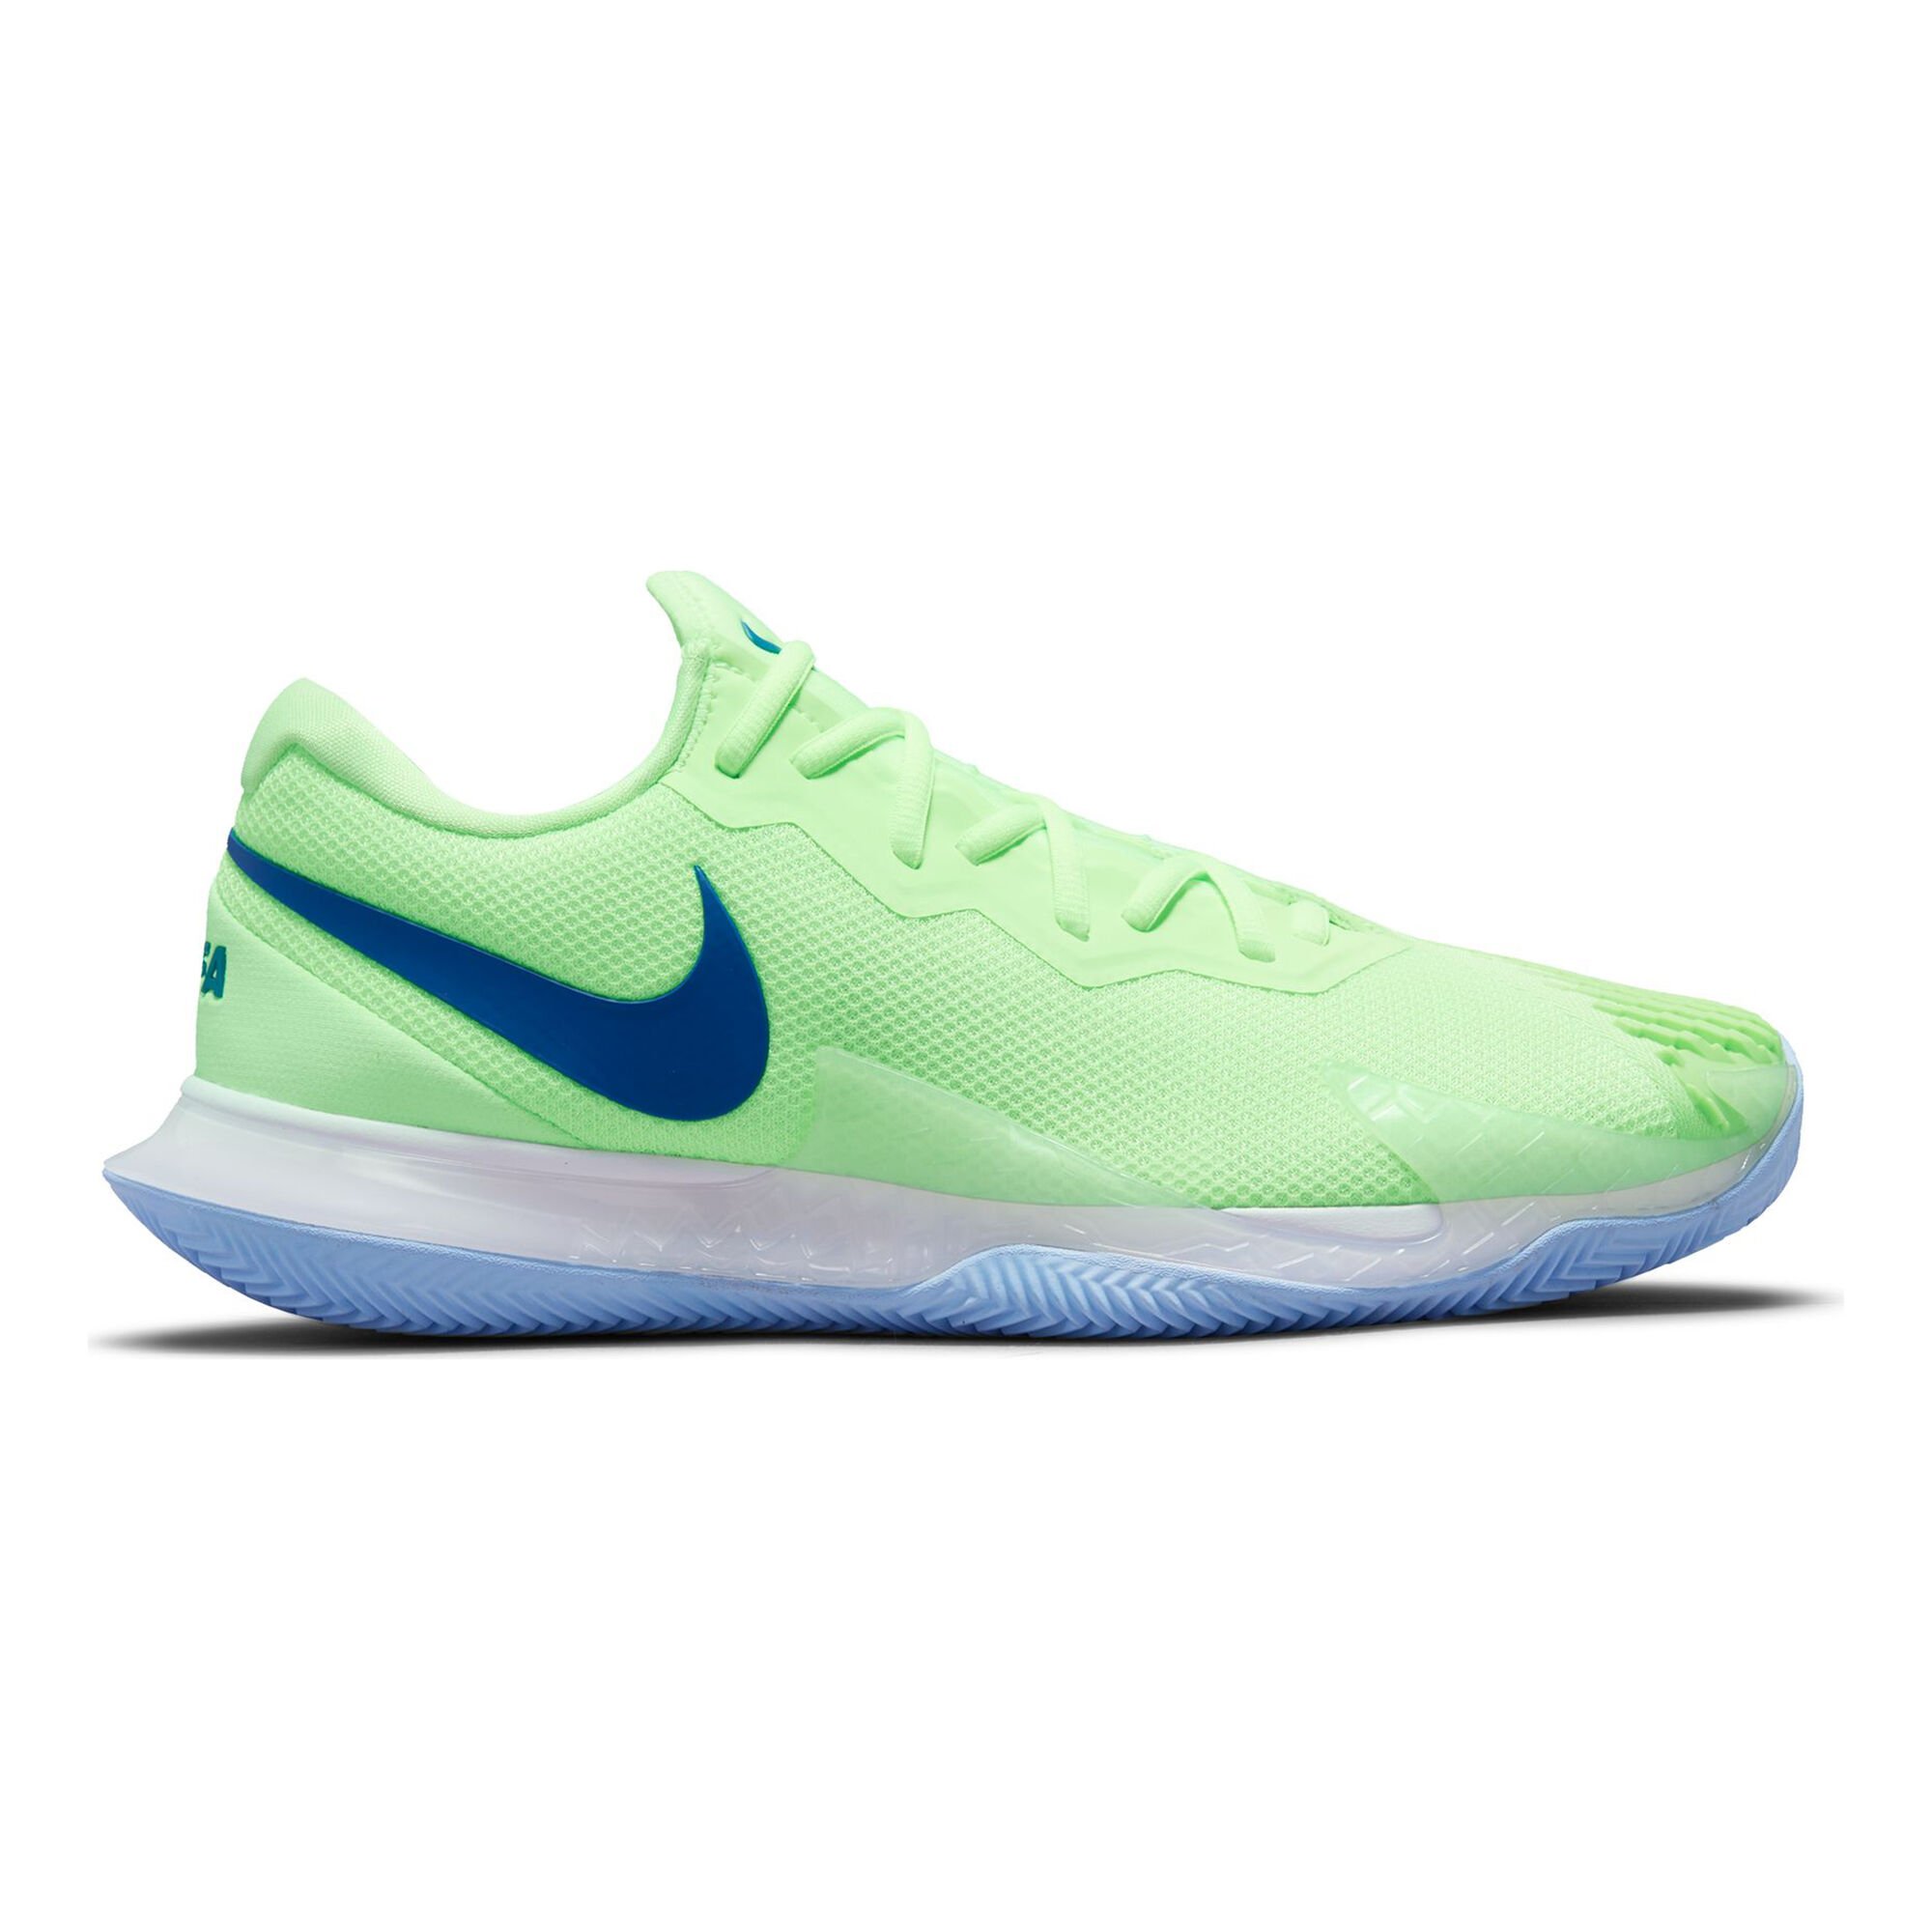 Atar Melancolía Ficticio Nike Rafael Nadal Air Zoom Vapor Cage 4 Chaussure Terre Battue Hommes -  Vert Fluo , Bleu acheter en ligne | Tennis-Point